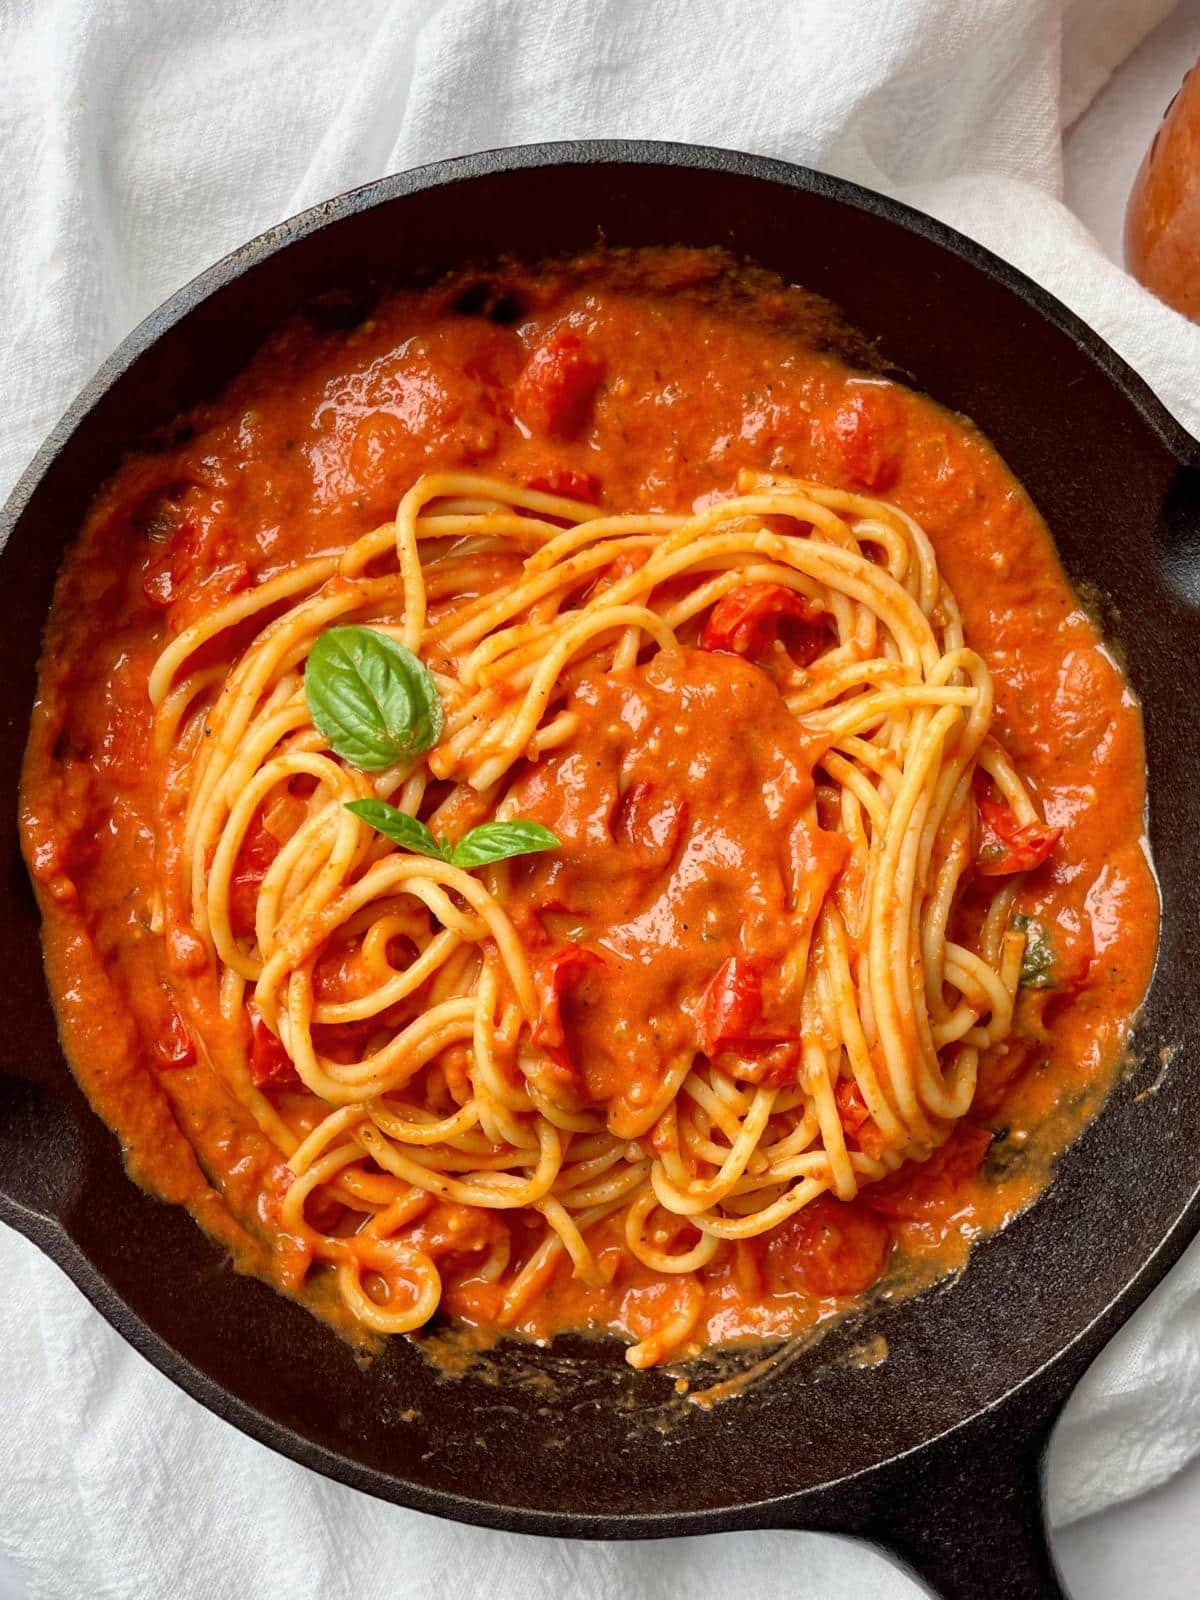 Tomato sauce with pasta.